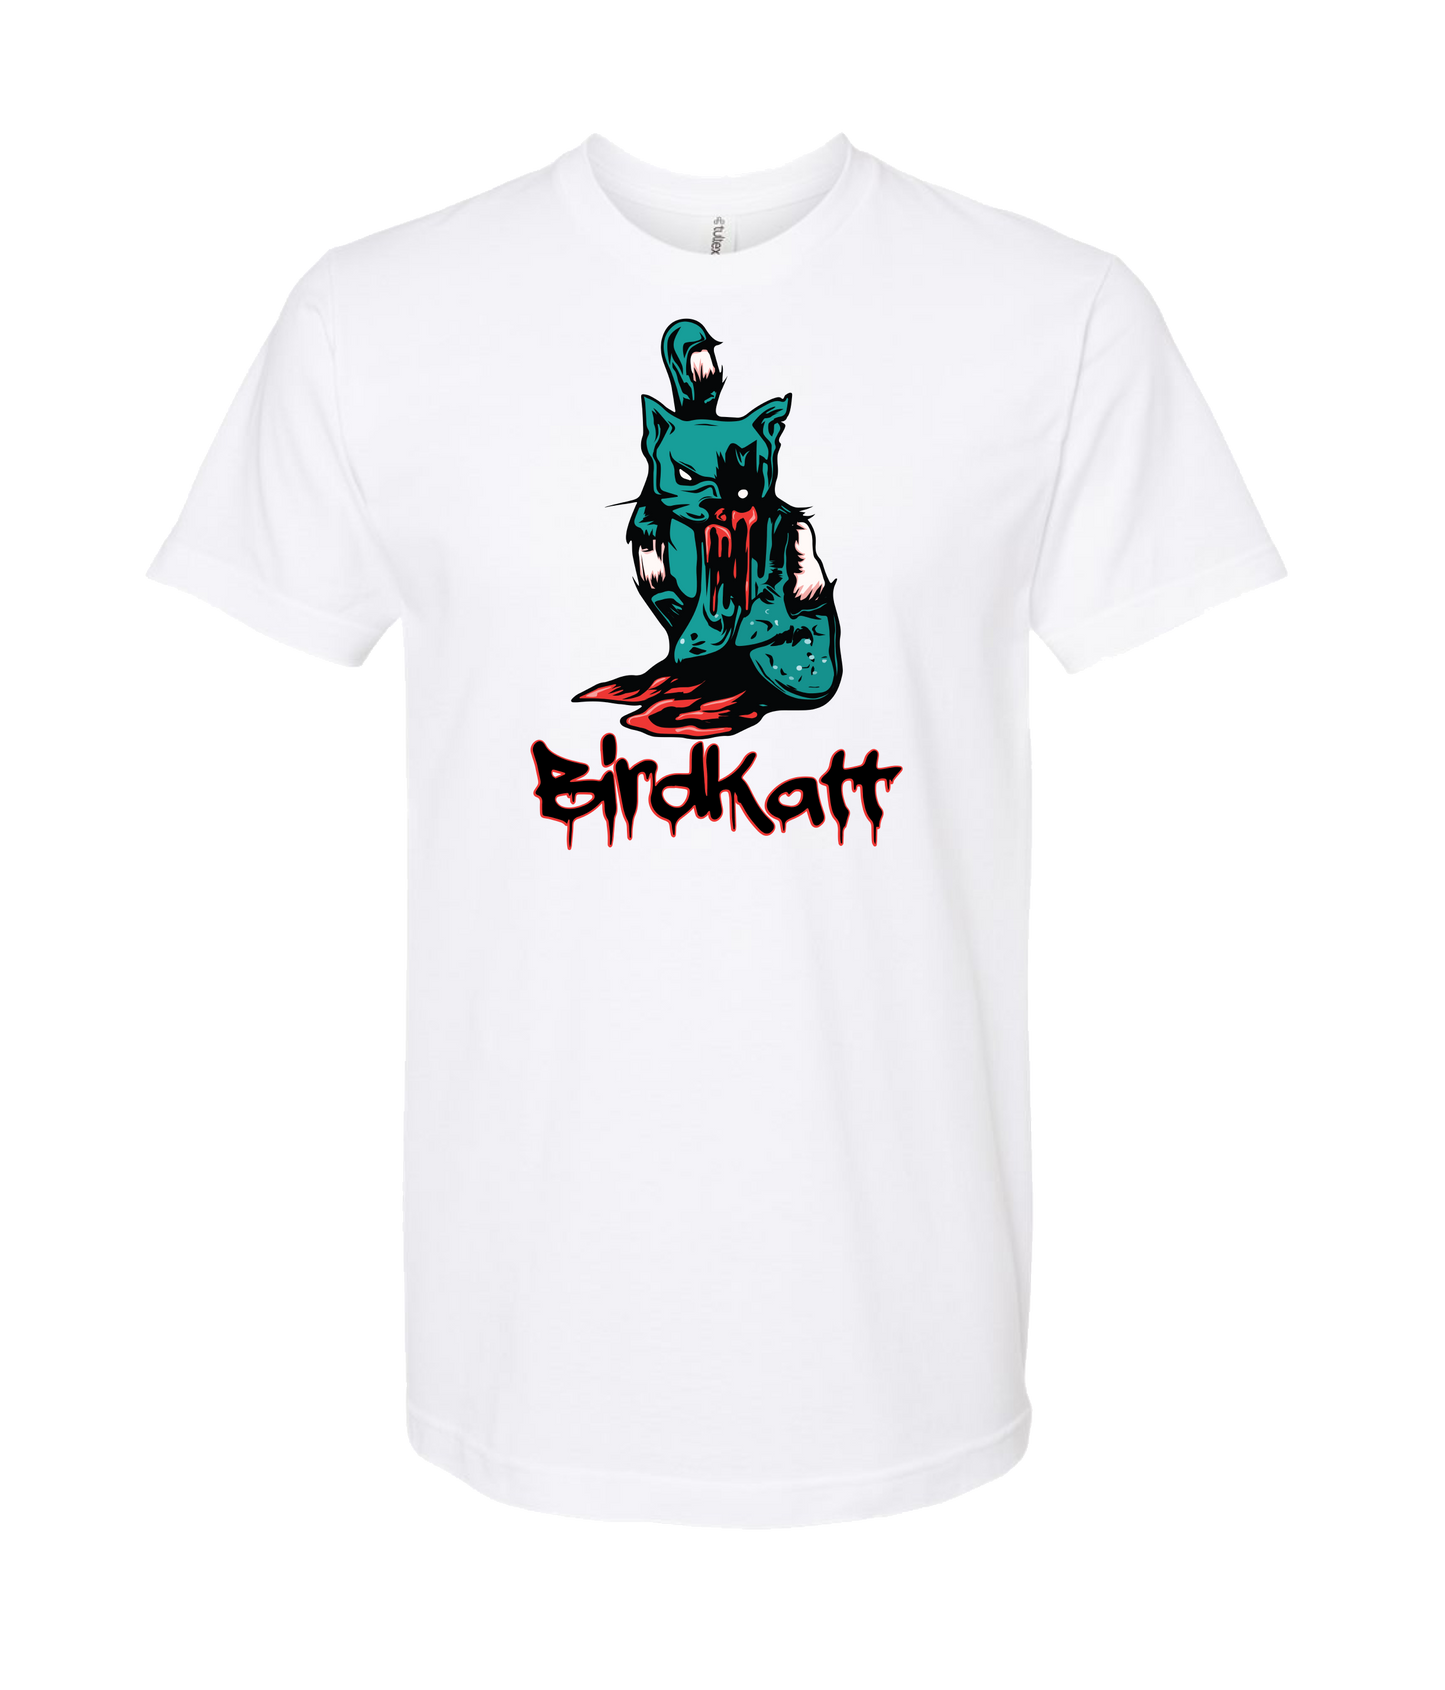 BirdKatt - Colored BKATT - White T-Shirt